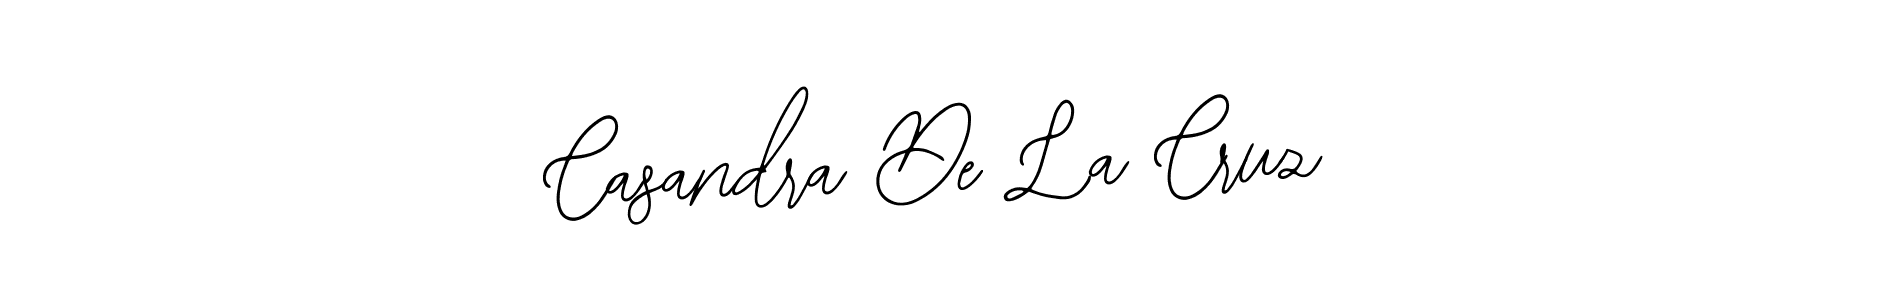 Make a beautiful signature design for name Casandra De La Cruz. Use this online signature maker to create a handwritten signature for free. Casandra De La Cruz signature style 12 images and pictures png